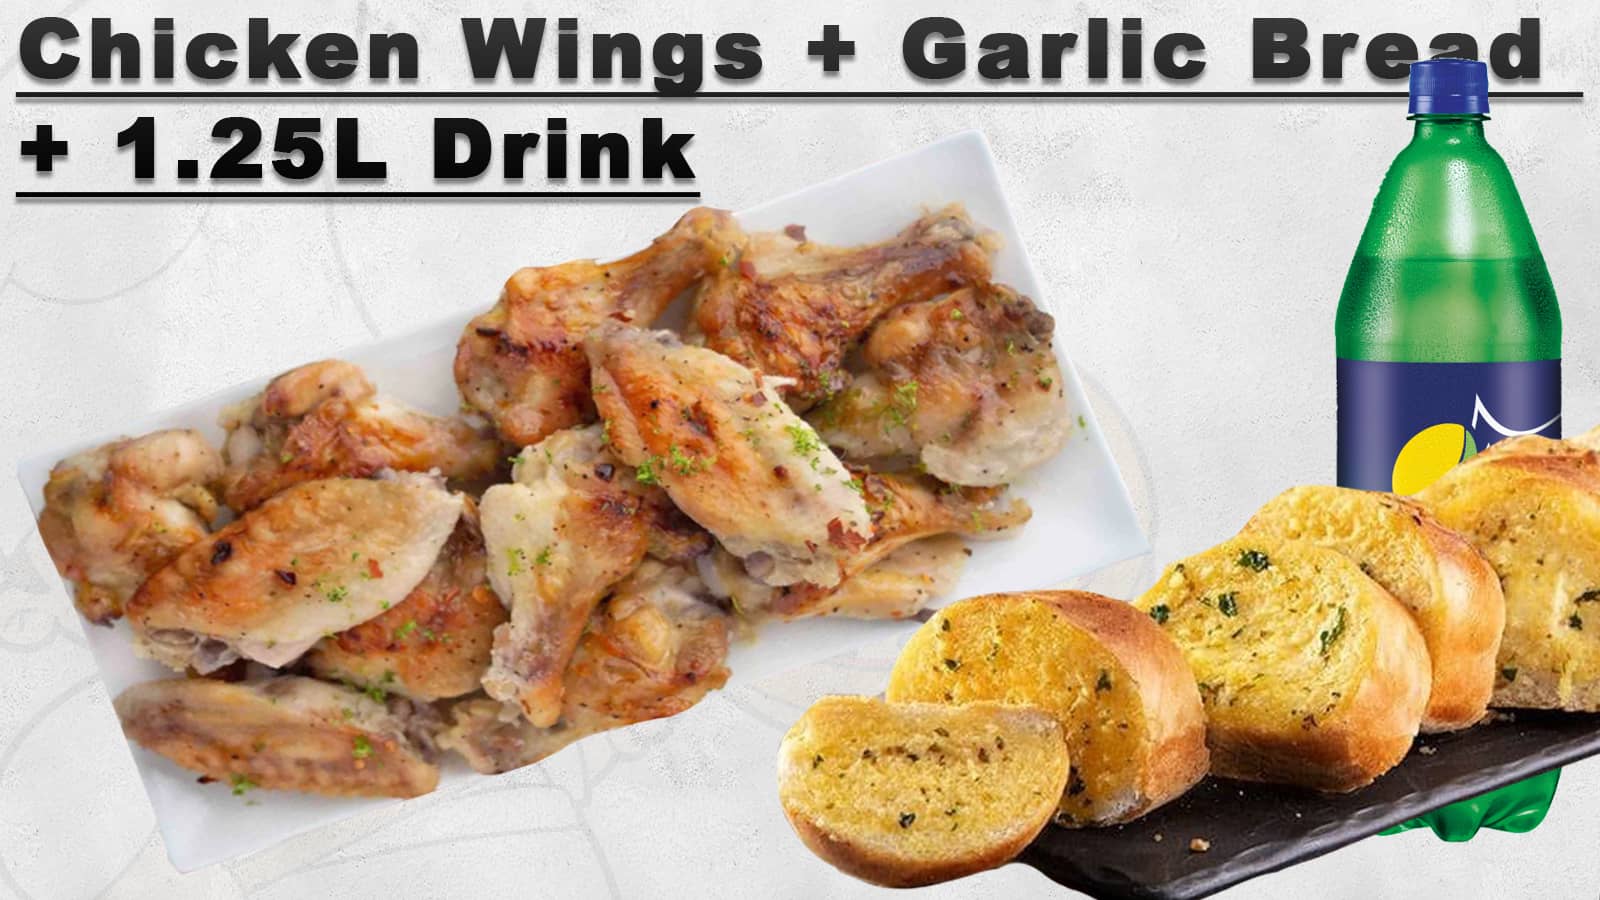 Chicken wings + Garlic Bread + 1.25 Drink